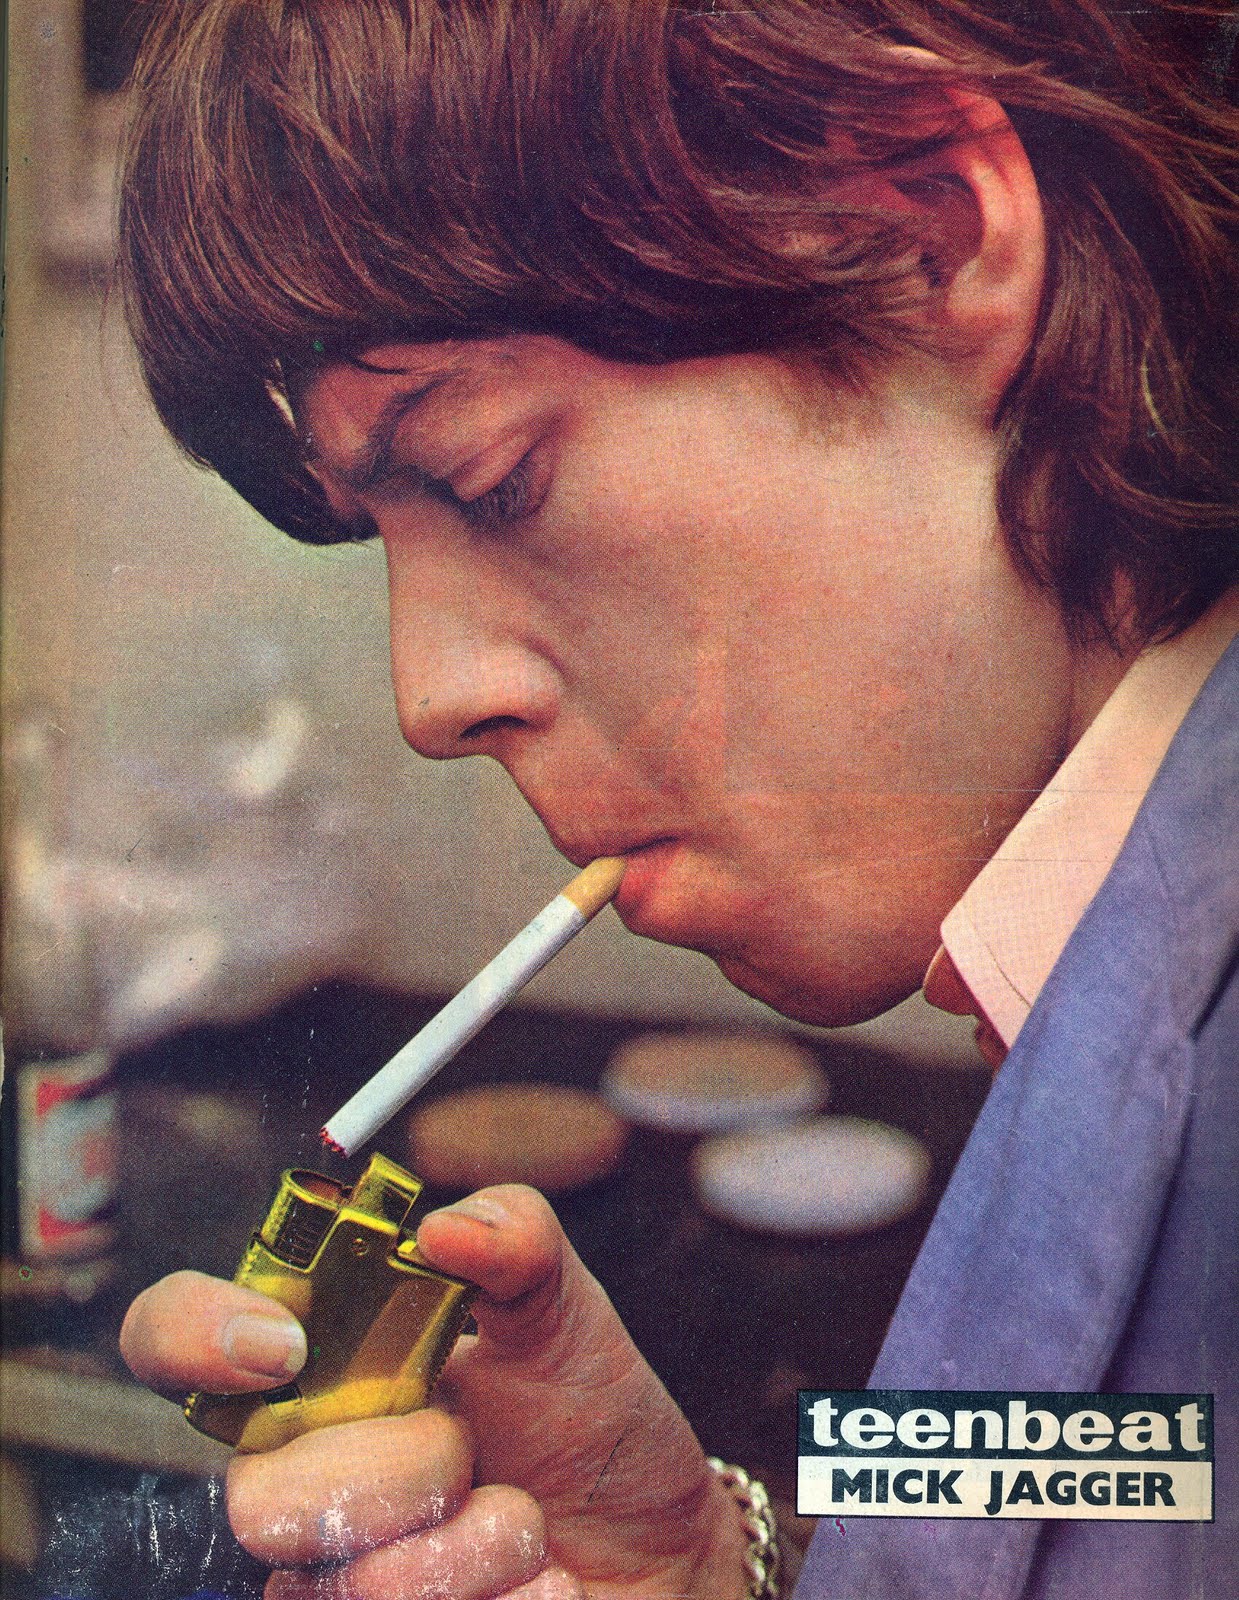 SIXTIES BEAT: Mick Jagger